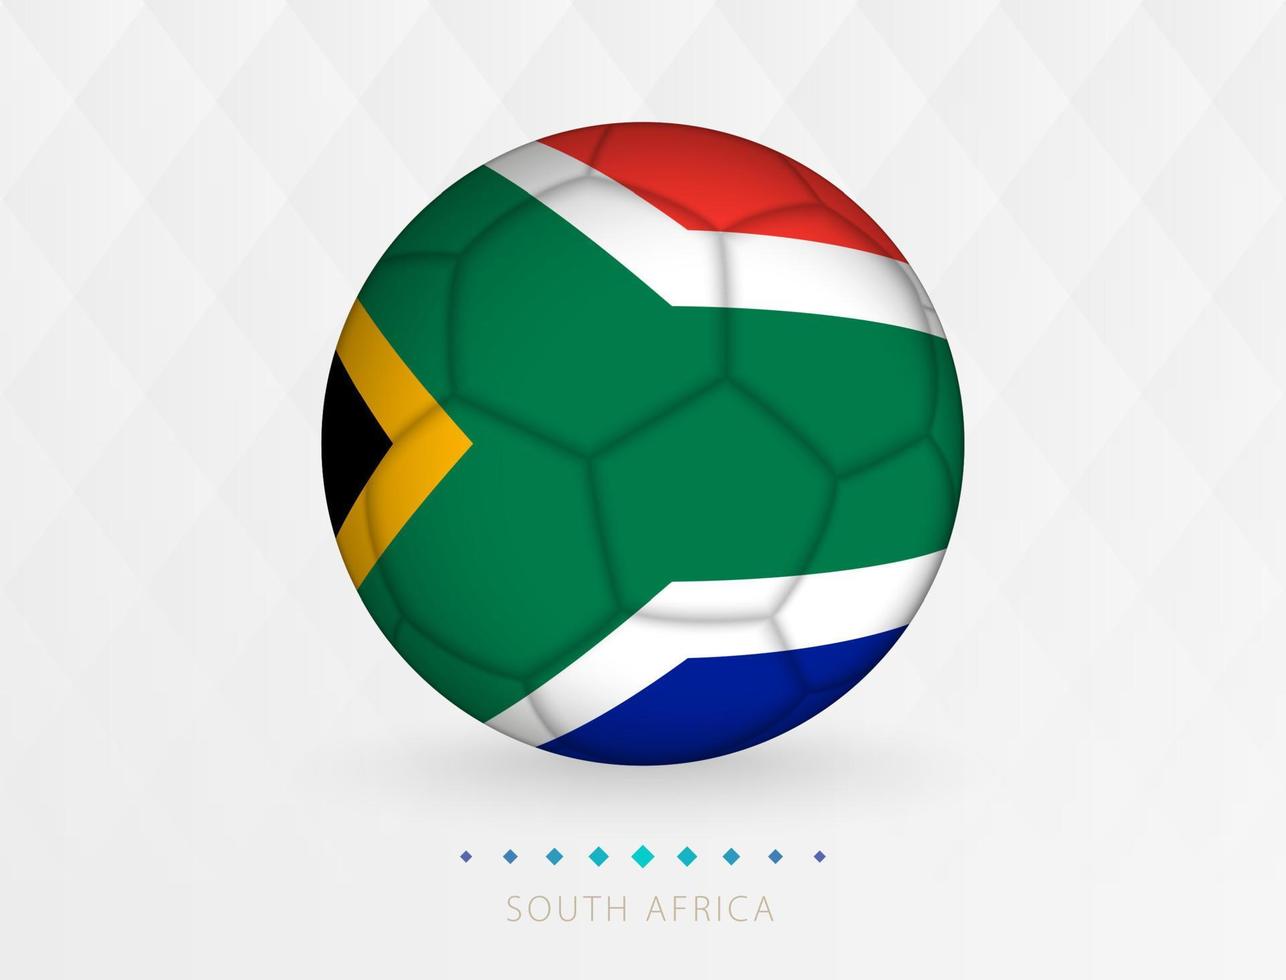 Amerikaans voetbal bal met zuiden Afrika vlag patroon, voetbal bal met vlag van zuiden Afrika nationaal team. vector